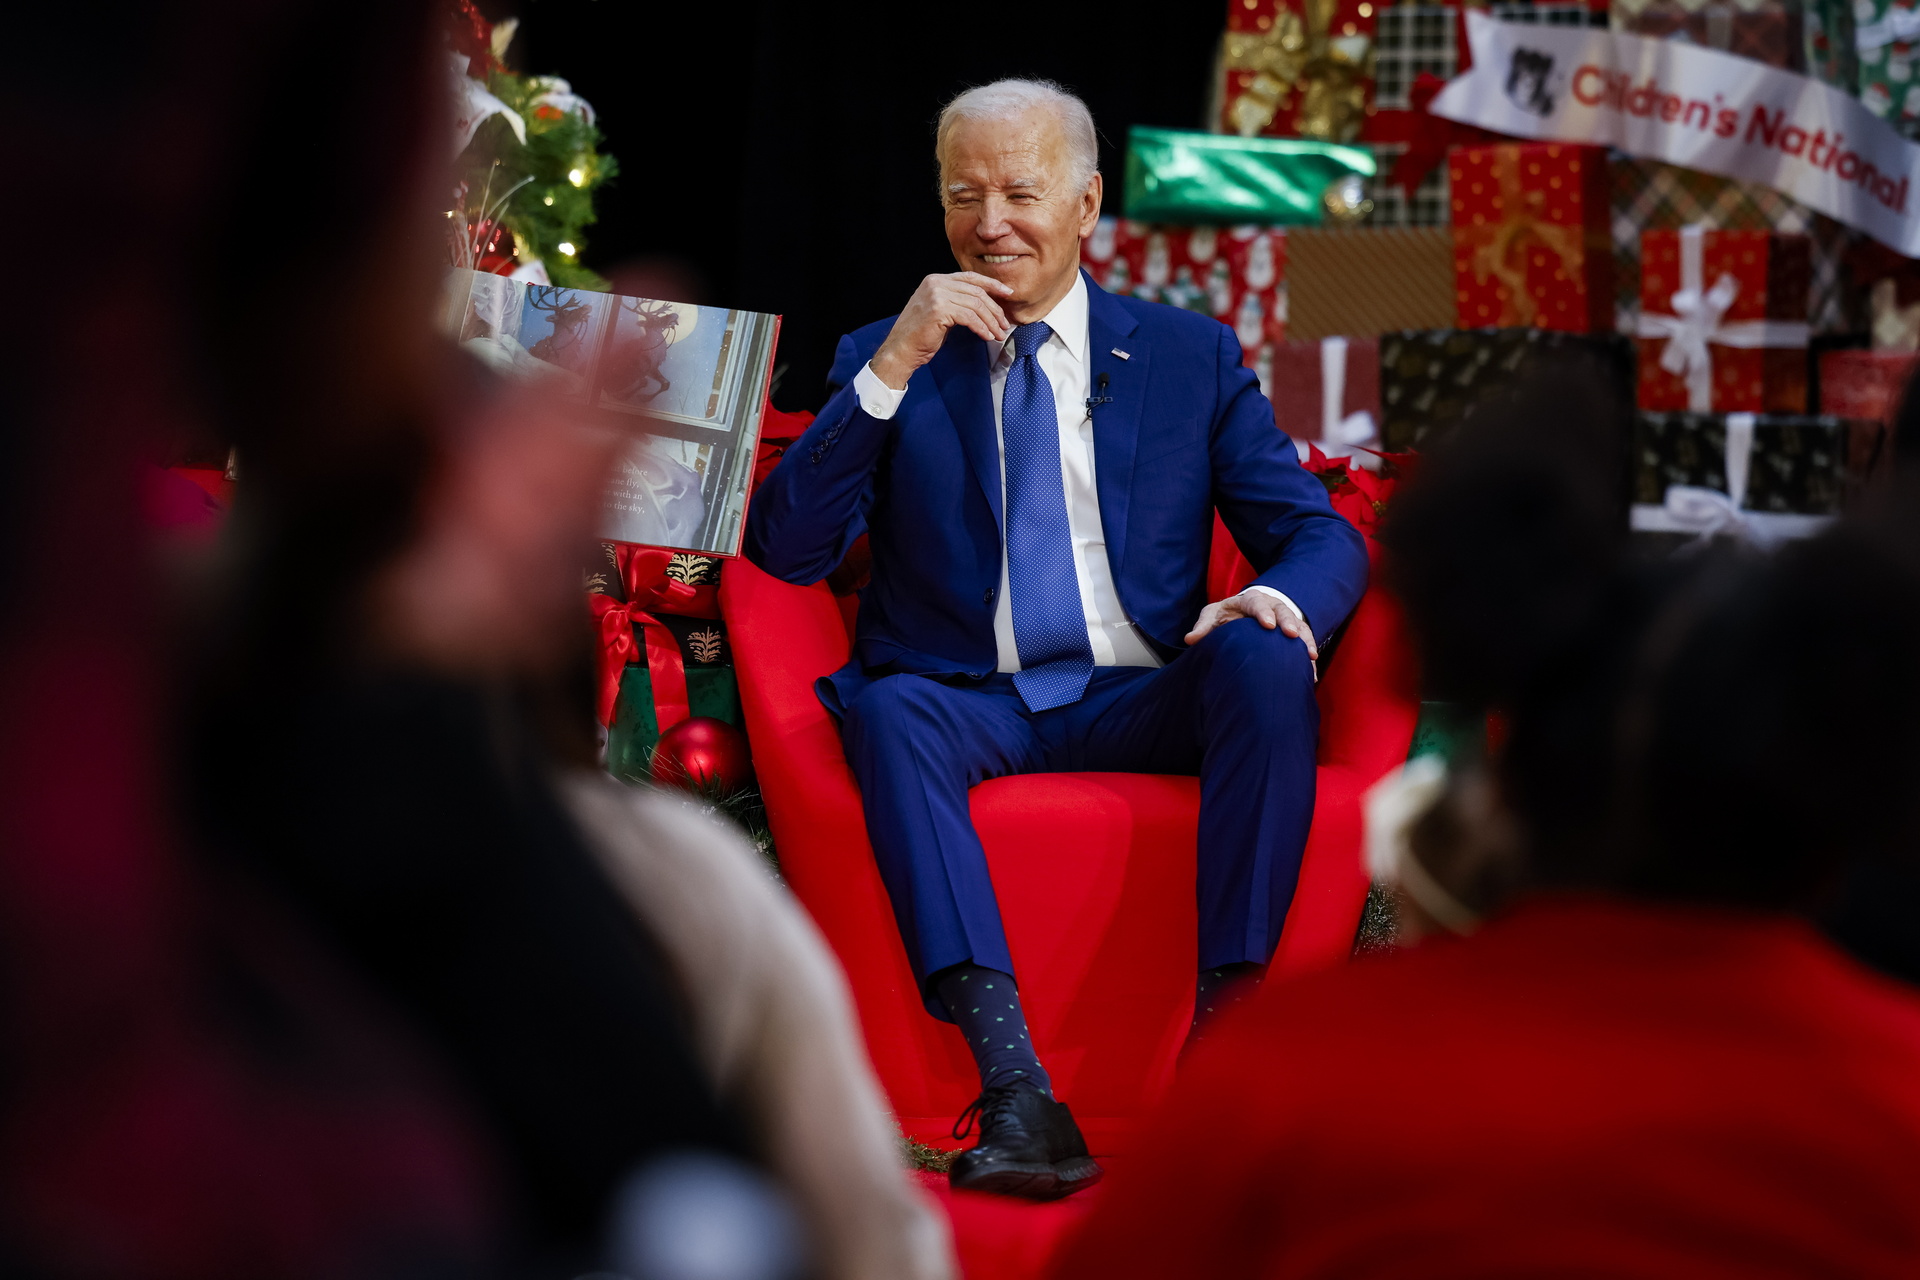 Días atrás, Biden recibió en la Casa Blanca a la cantante Mariah Carey y juntos escucharon su emblemática canción navideña 'All I want for Christmas is you'. (ARCHIVO)